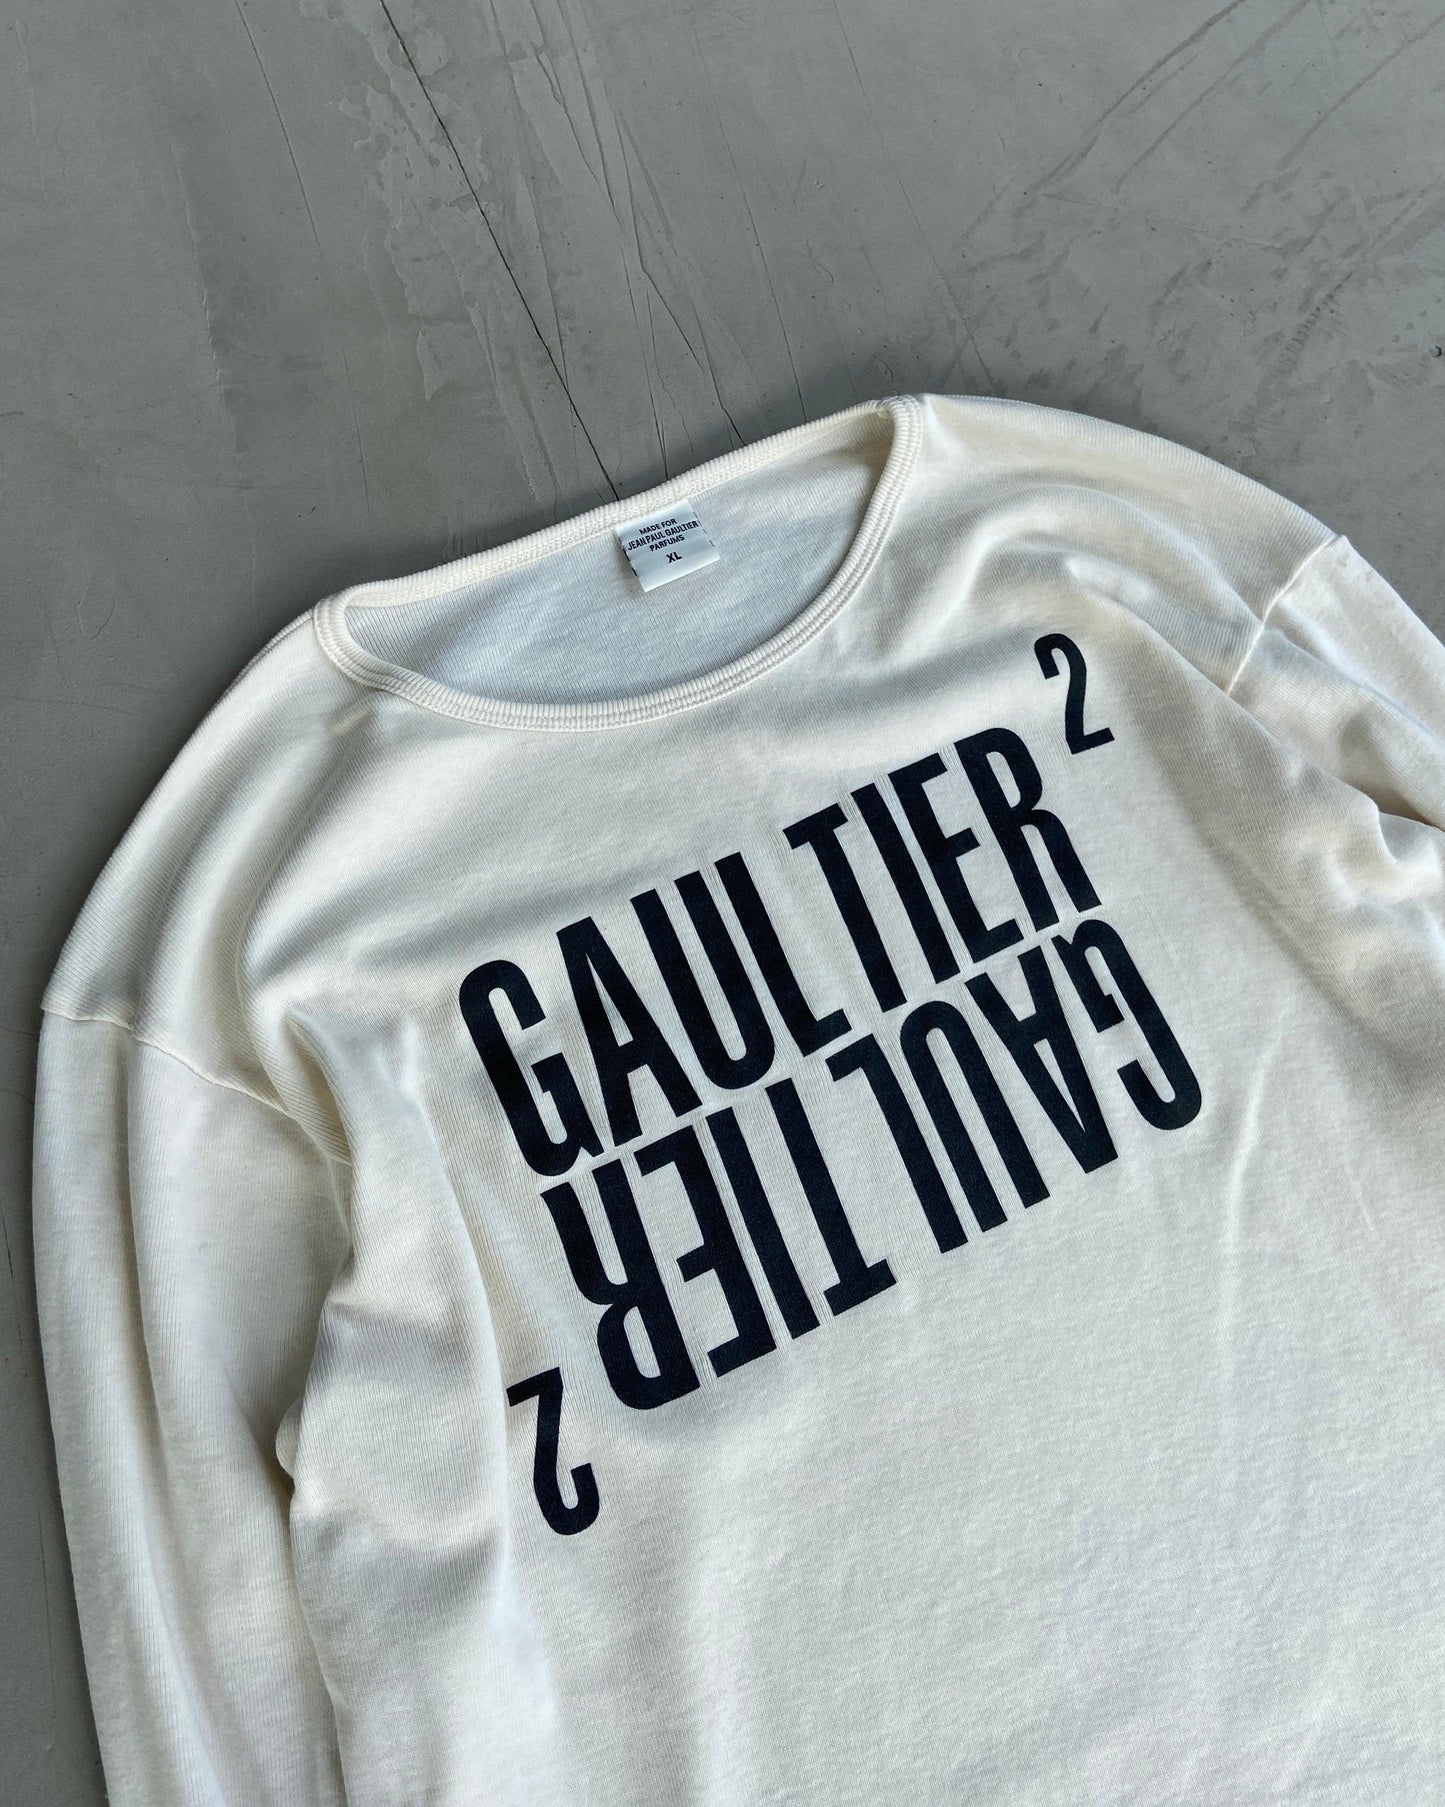 JEAN PAUL GAULTIER 'GAULTIER²' LONG SLEEVE TOP - M - Known Source